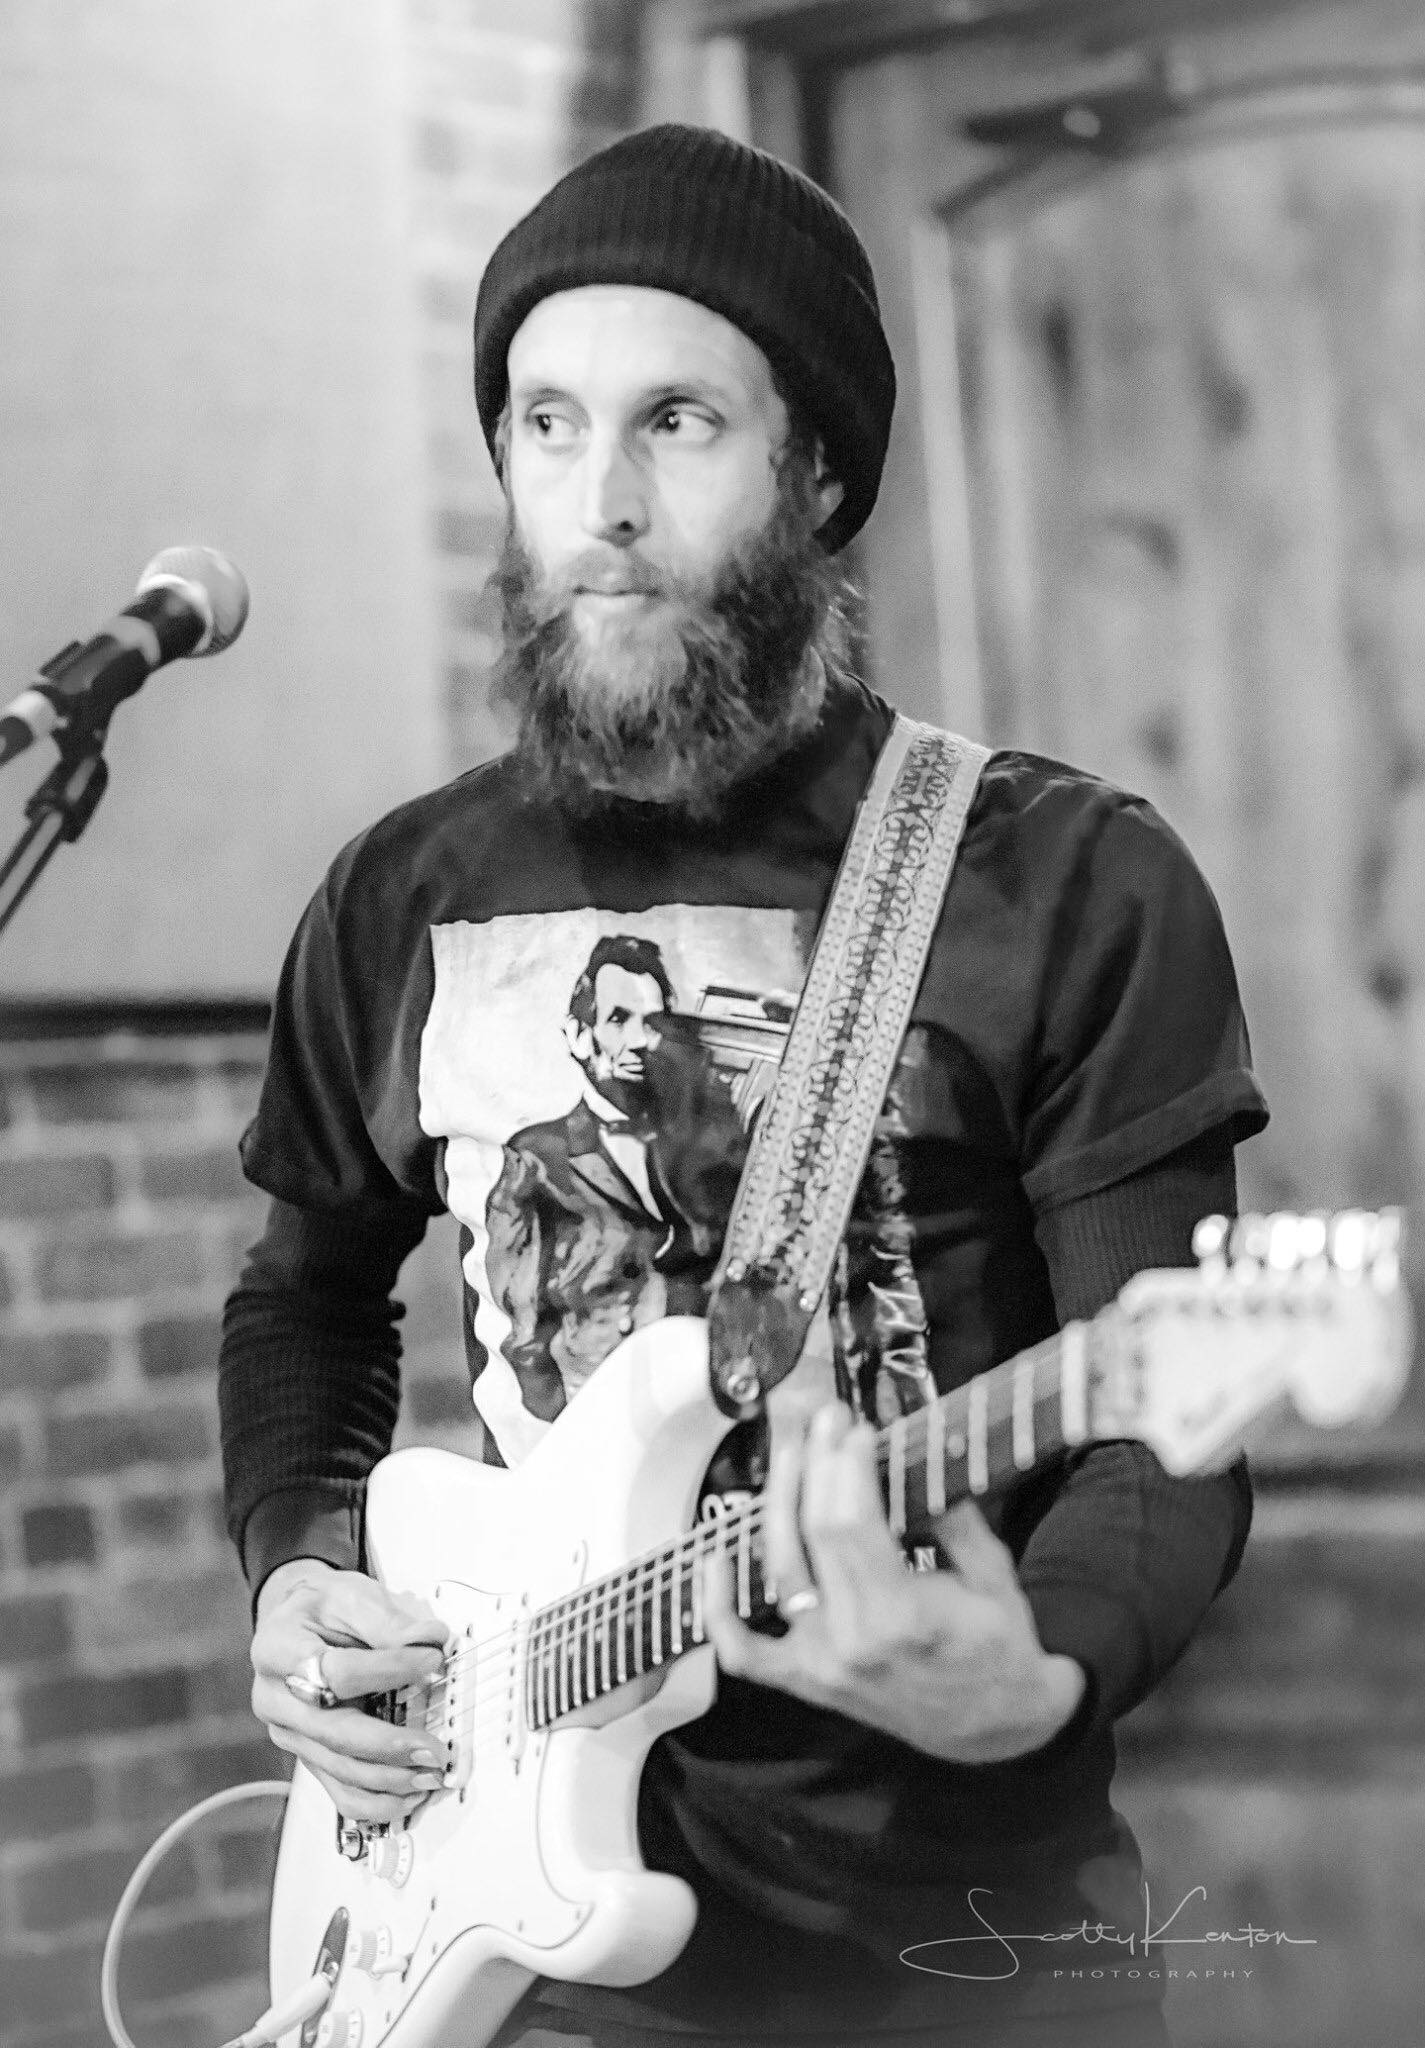 Man with a beard playing guitar